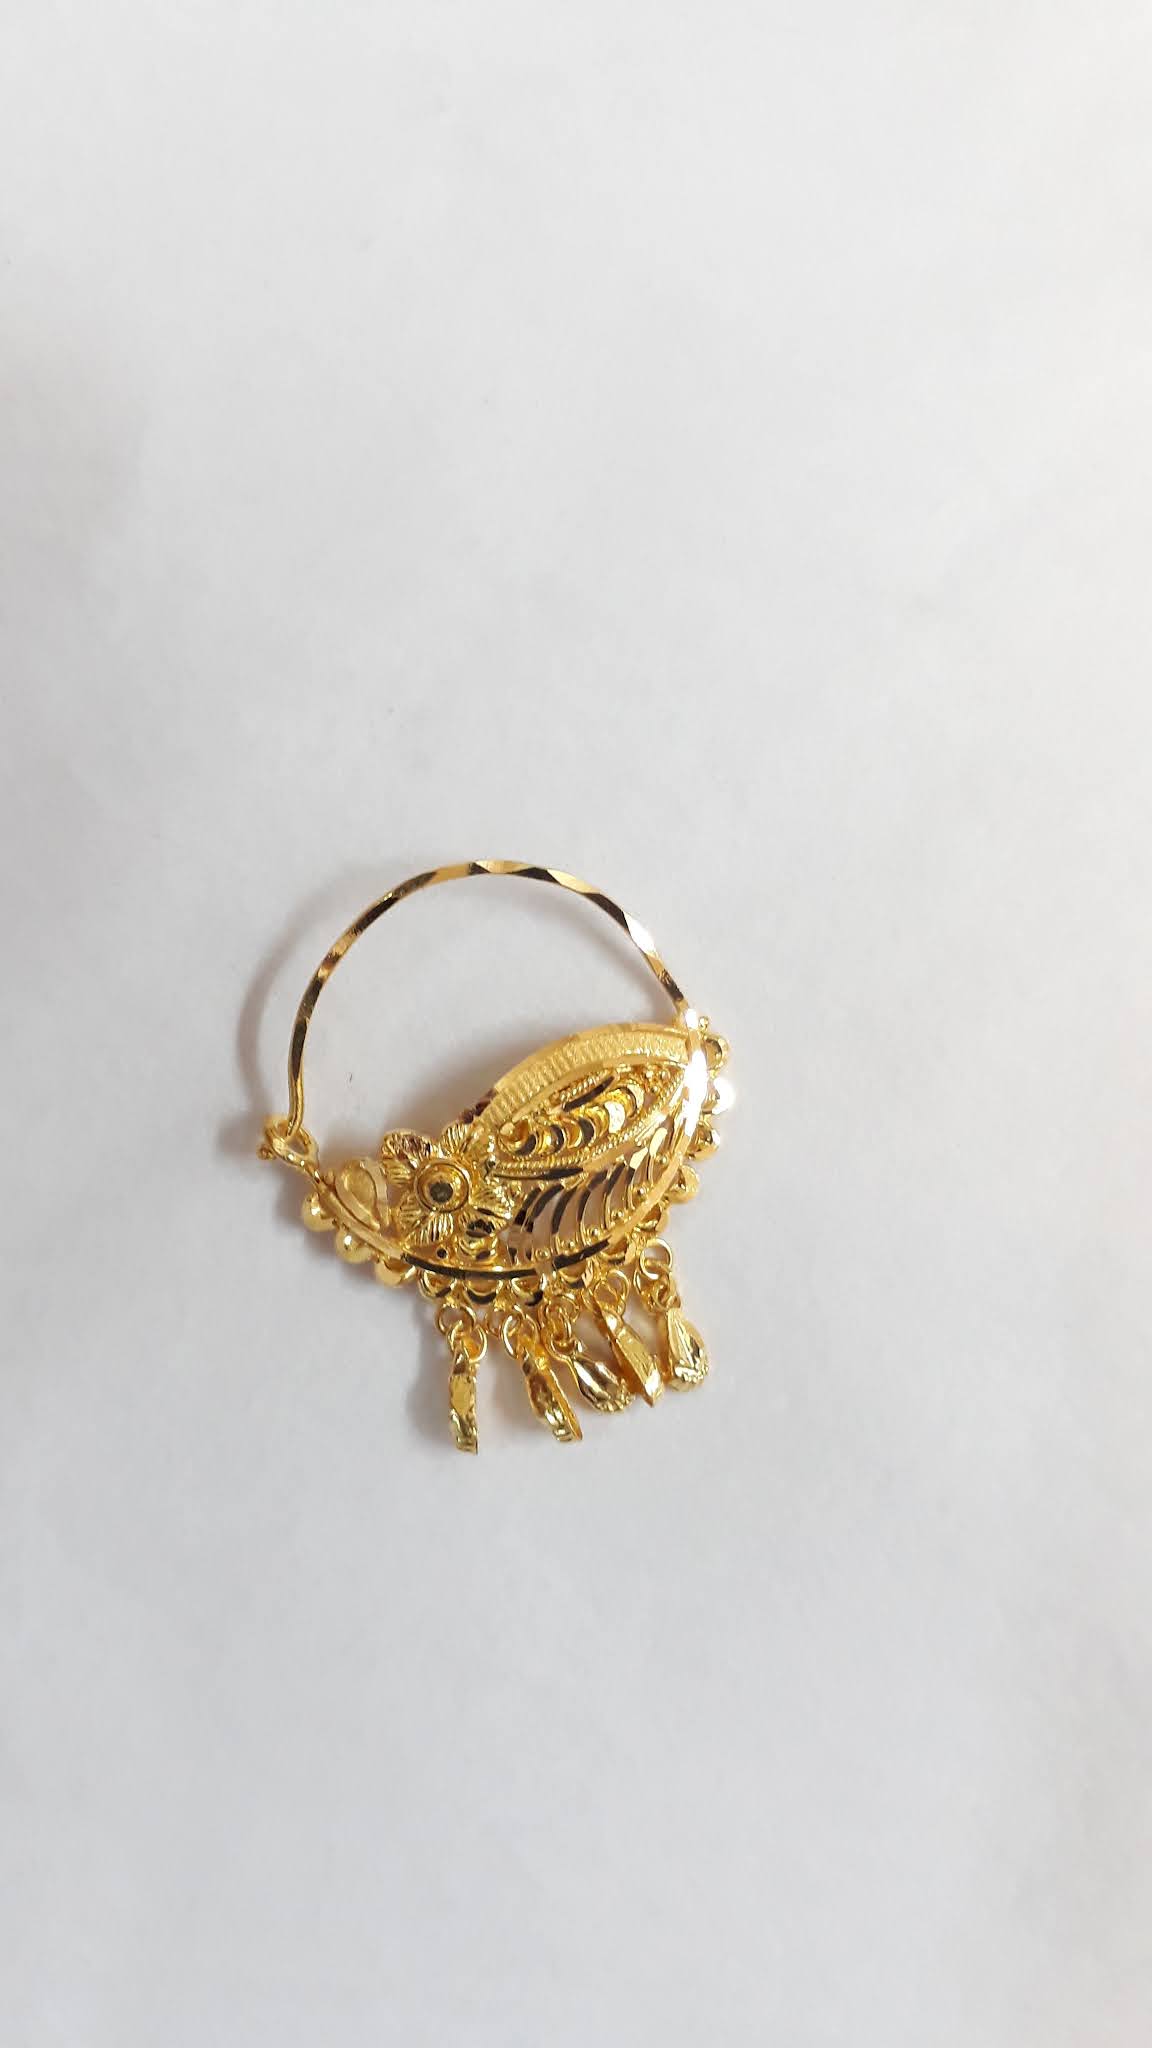 Golld Nathia Designs, Gold noth design, Gold nose ring, gold bridal nose pin, nose ring, nose stud, gold nose ring, nathia designs, Gold Nathia designs, Bridal Nath nathia designs